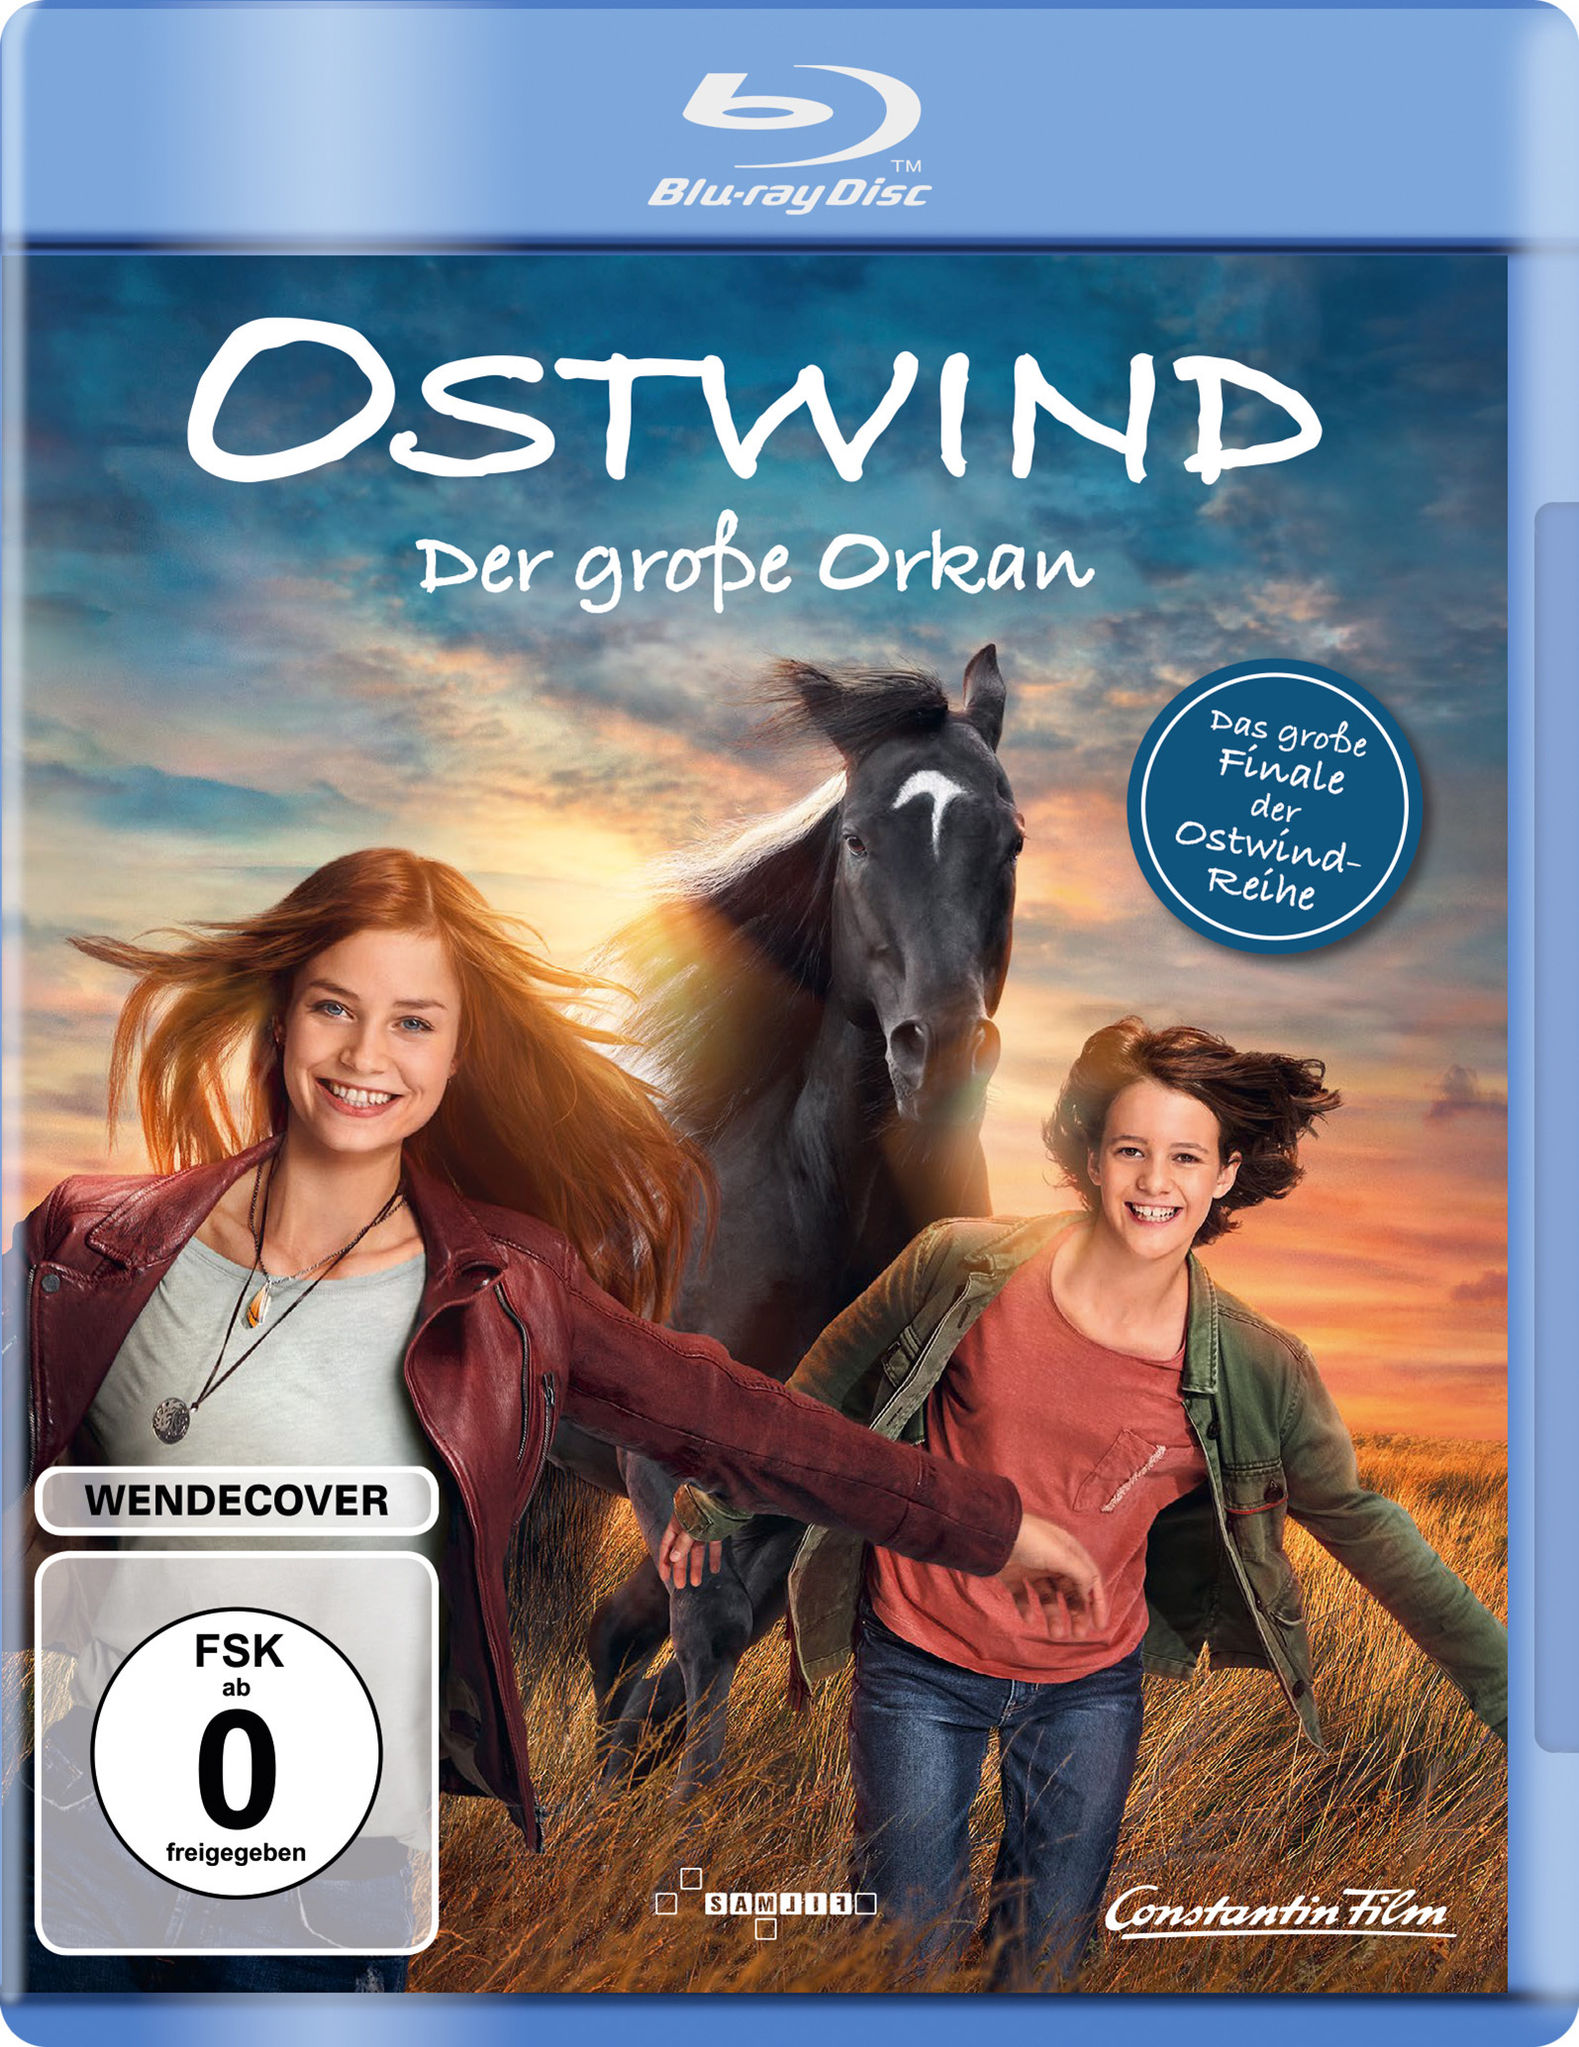 Ostwind 5 - Der grosse Orkan Blu-ray bei Weltbild.de kaufen